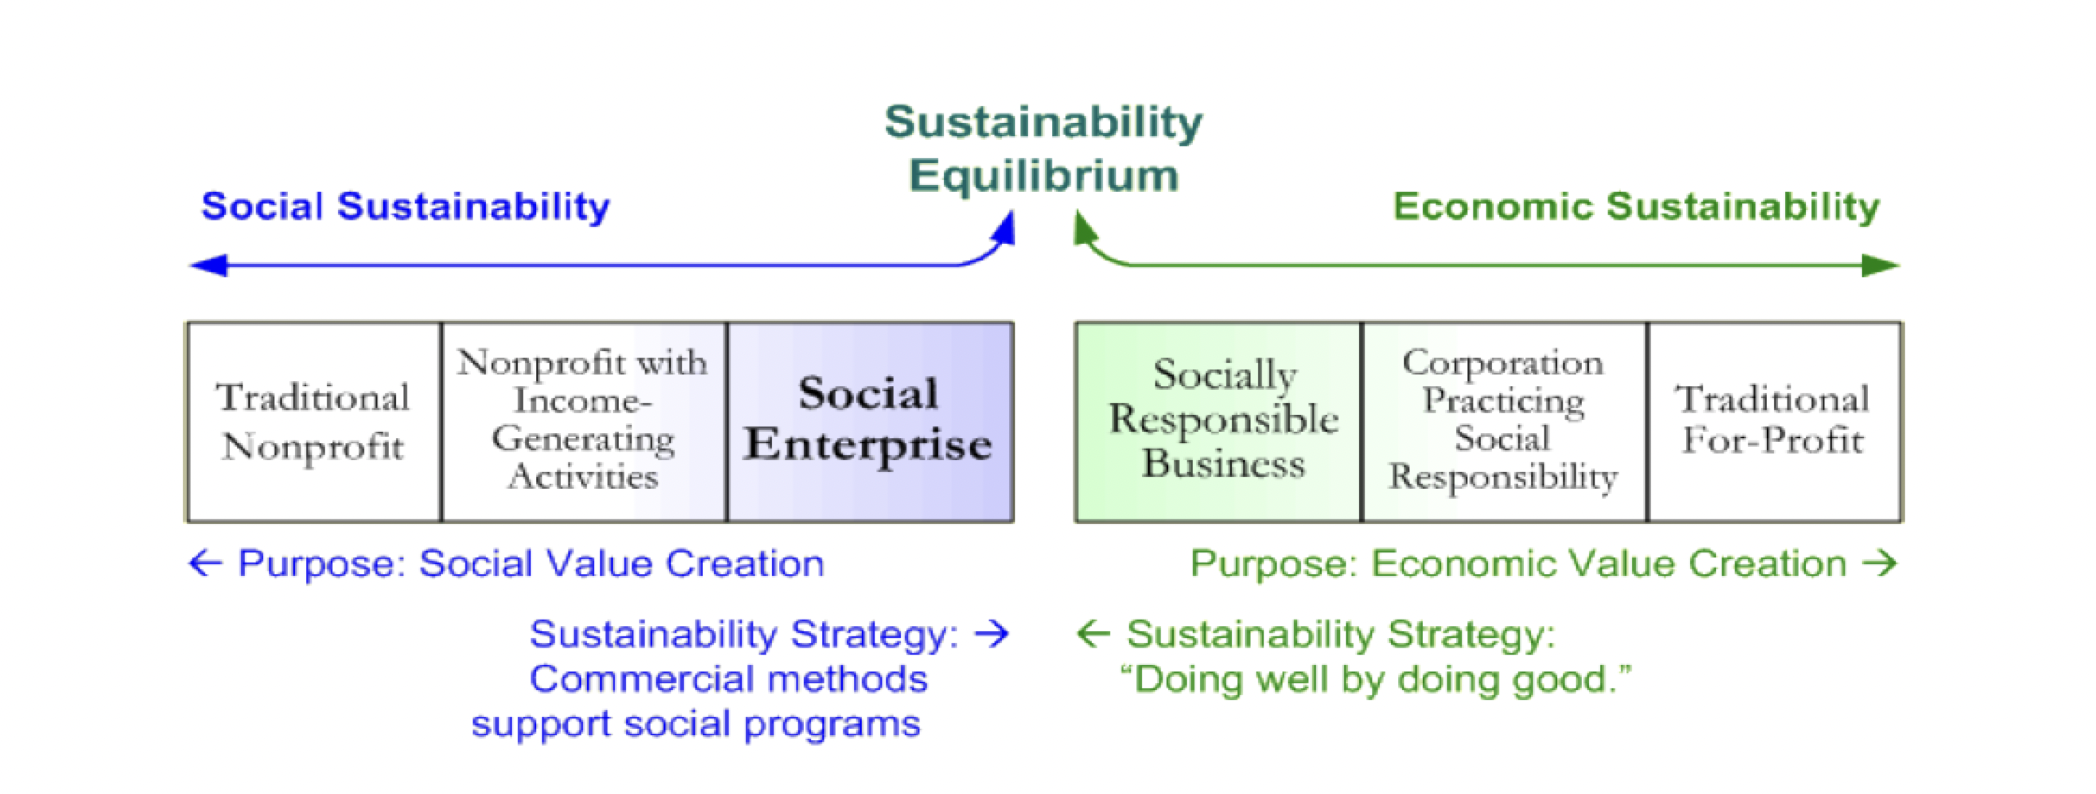 Sustainability Equilibrium diagram. See footnote three for full description.